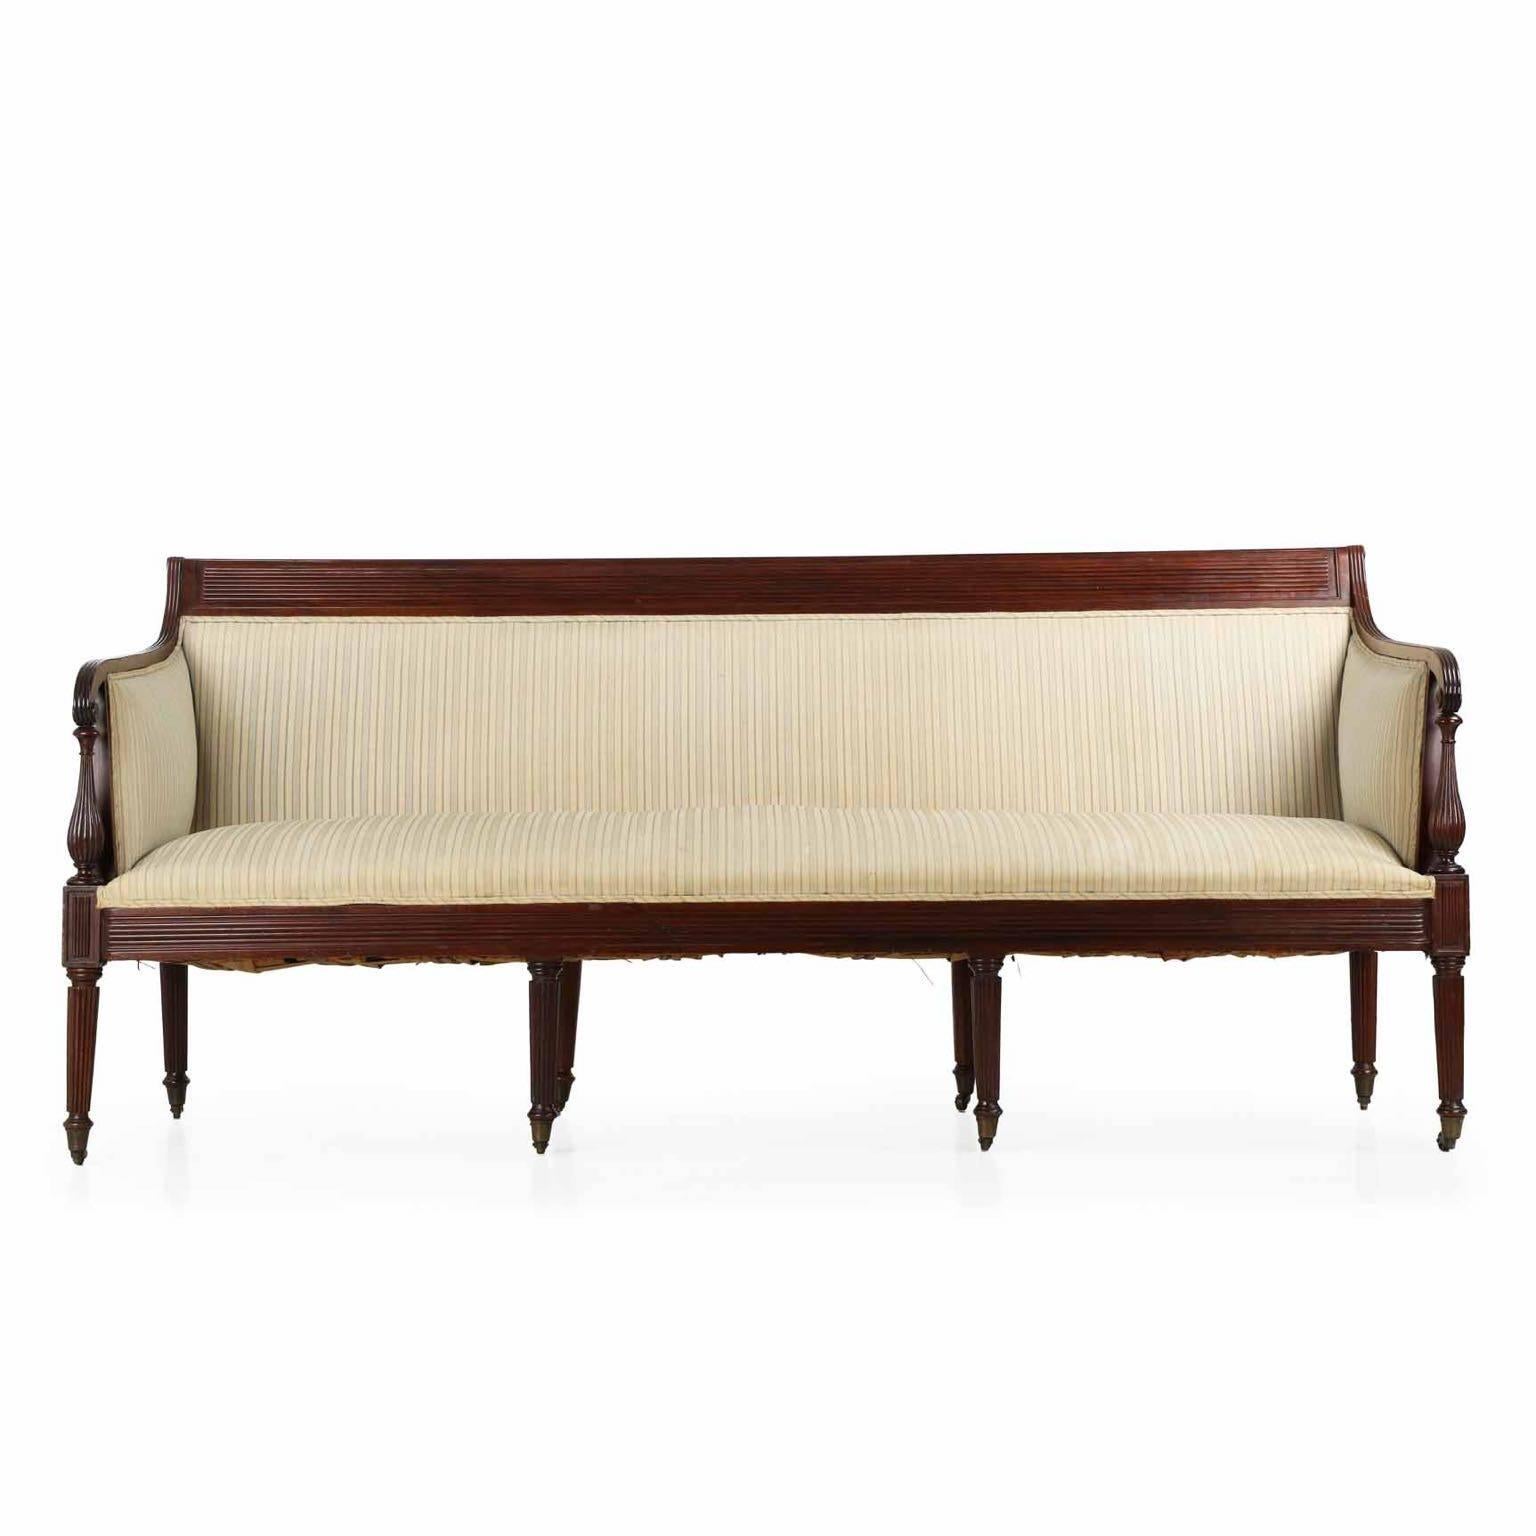 American Classical Reeded Mahogany Antique Sofa Settee, Baltimore, circa 1820